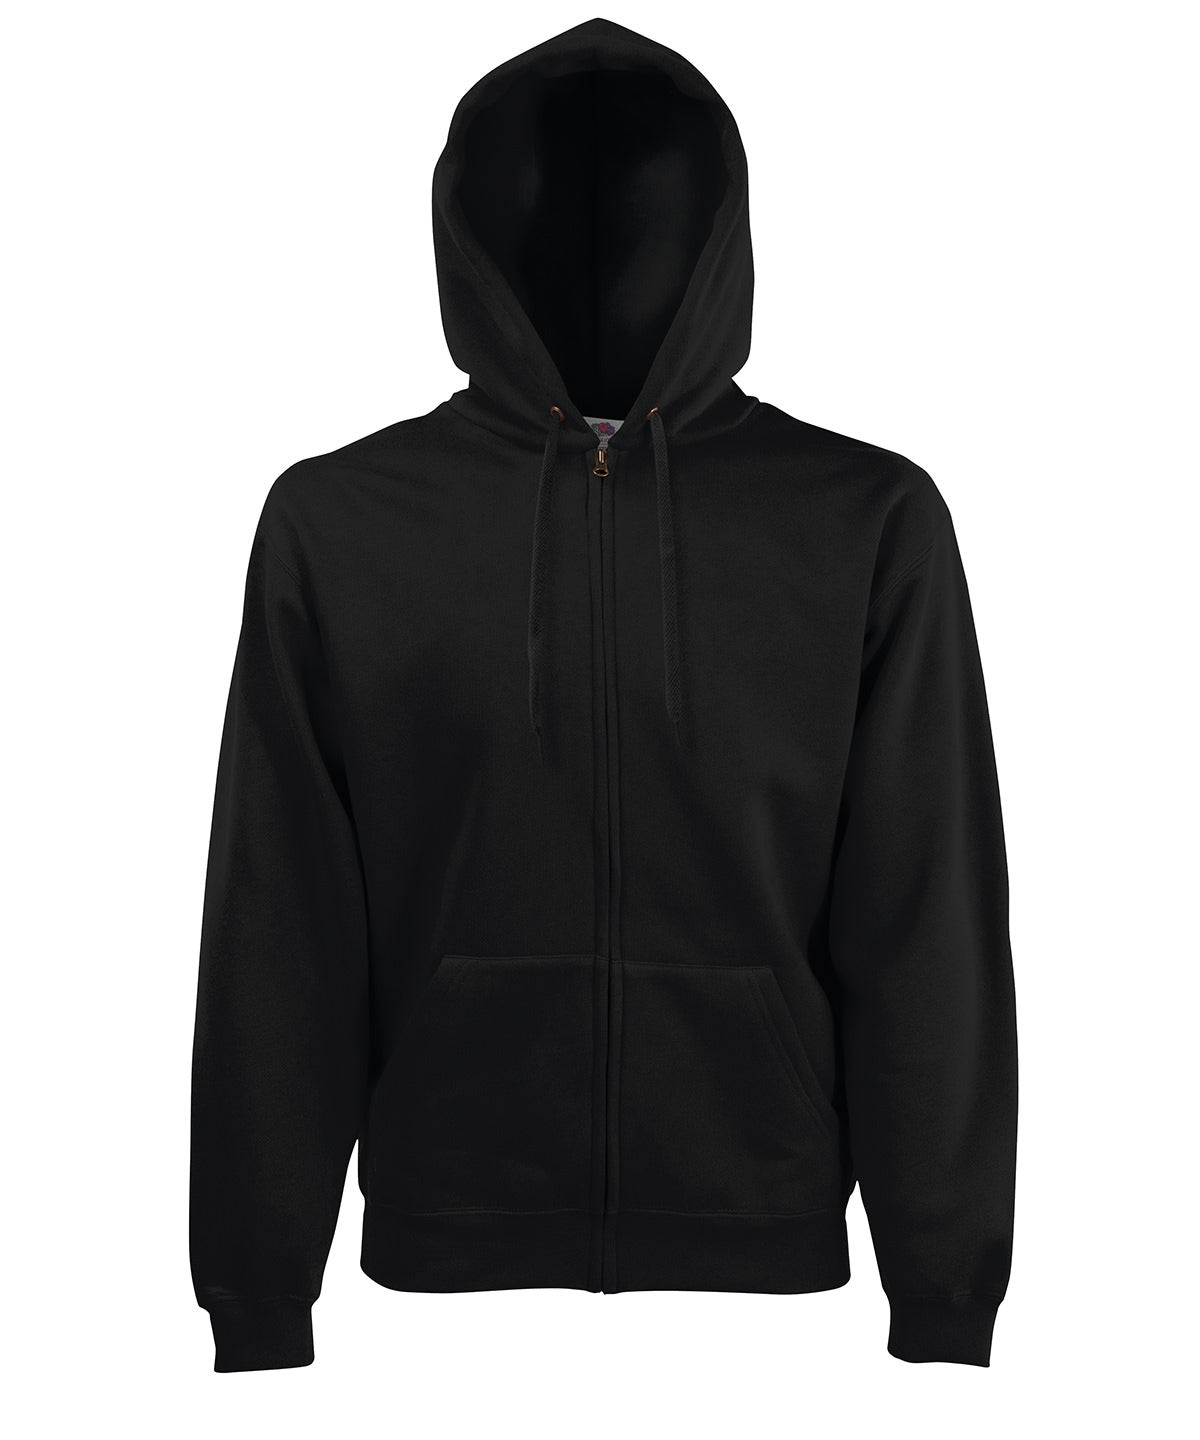 Hettupeysur - Premium 70/30 Hooded Sweatshirt Jacket